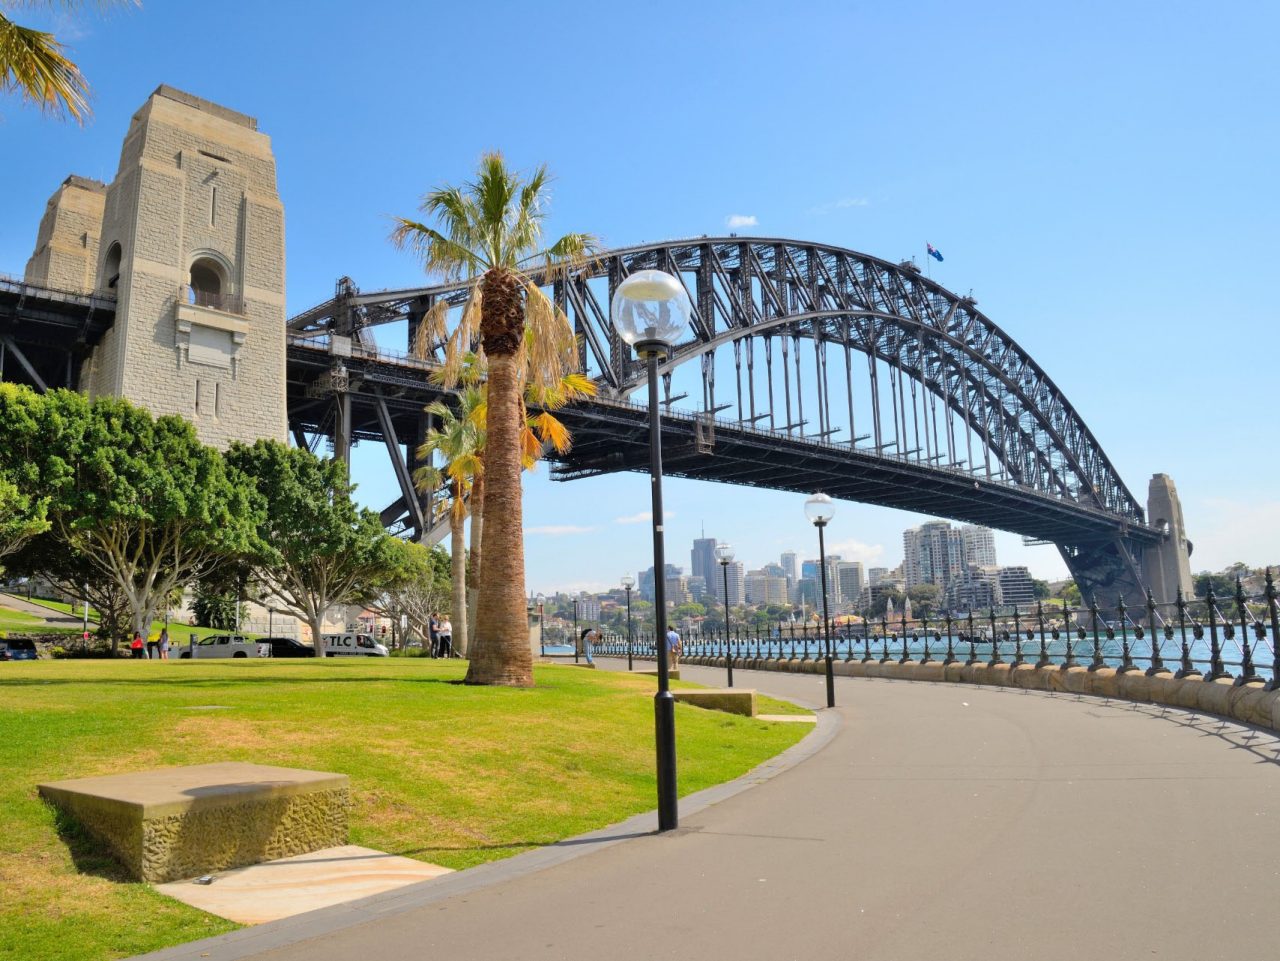 Side view of Sydney Harbour bridge in bright blue sky.